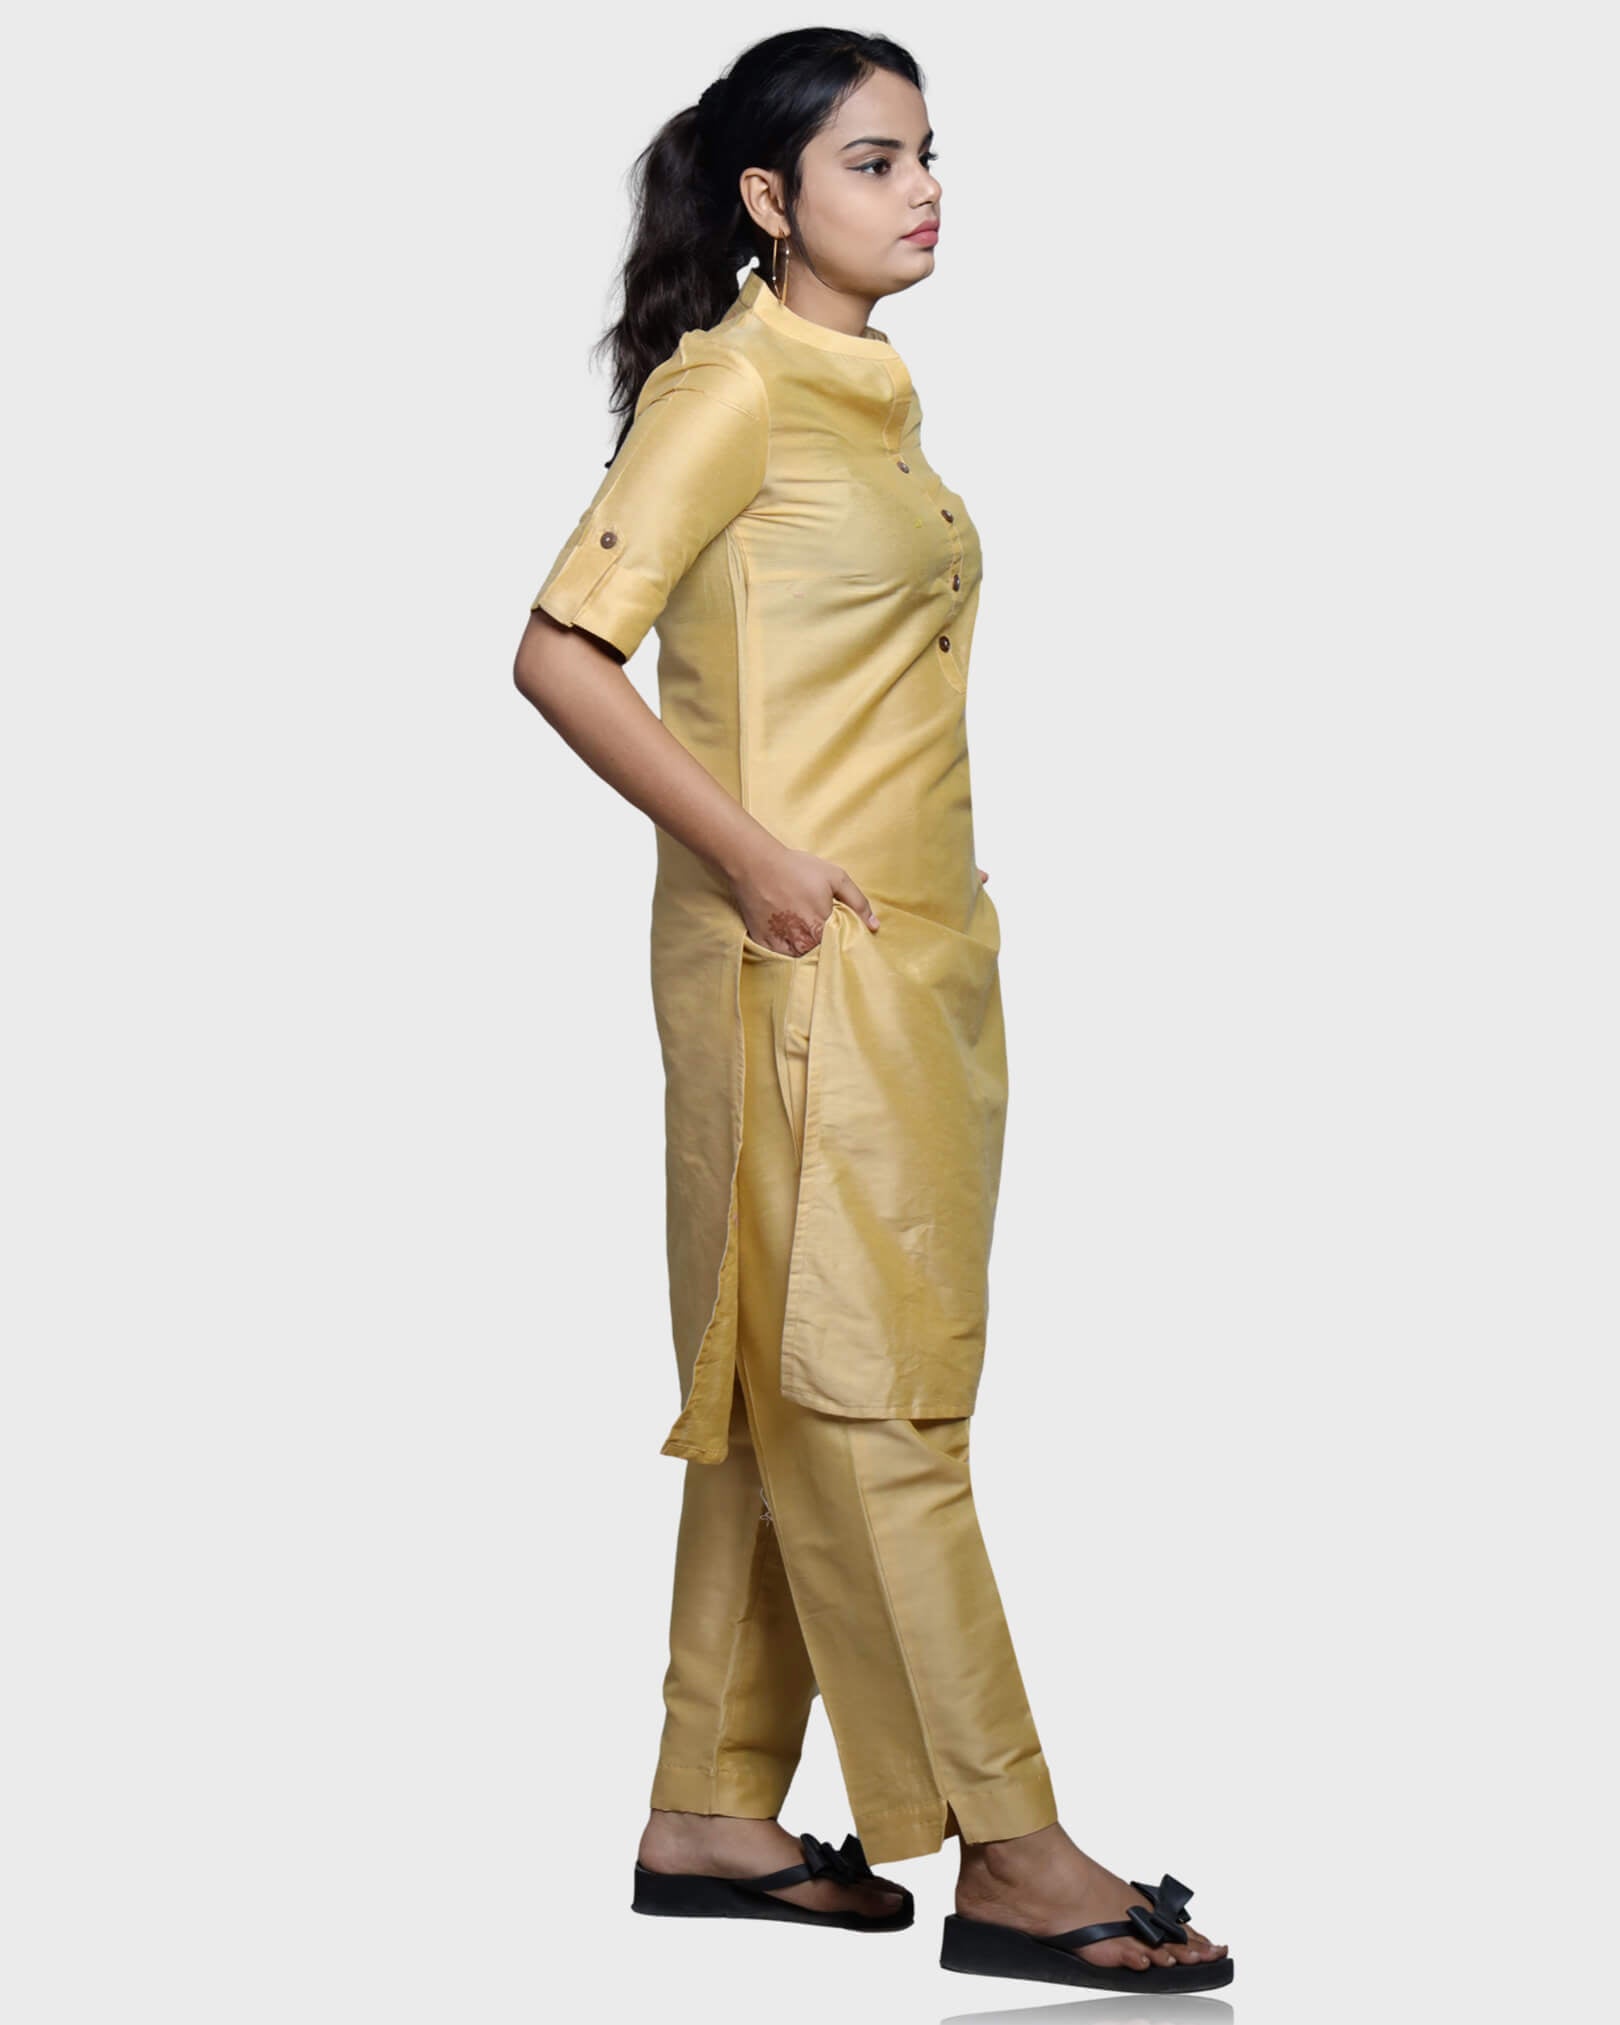 Silkfab Women's Banarasi Silk Beige Solid Kurti Pant Set - SILKFAB